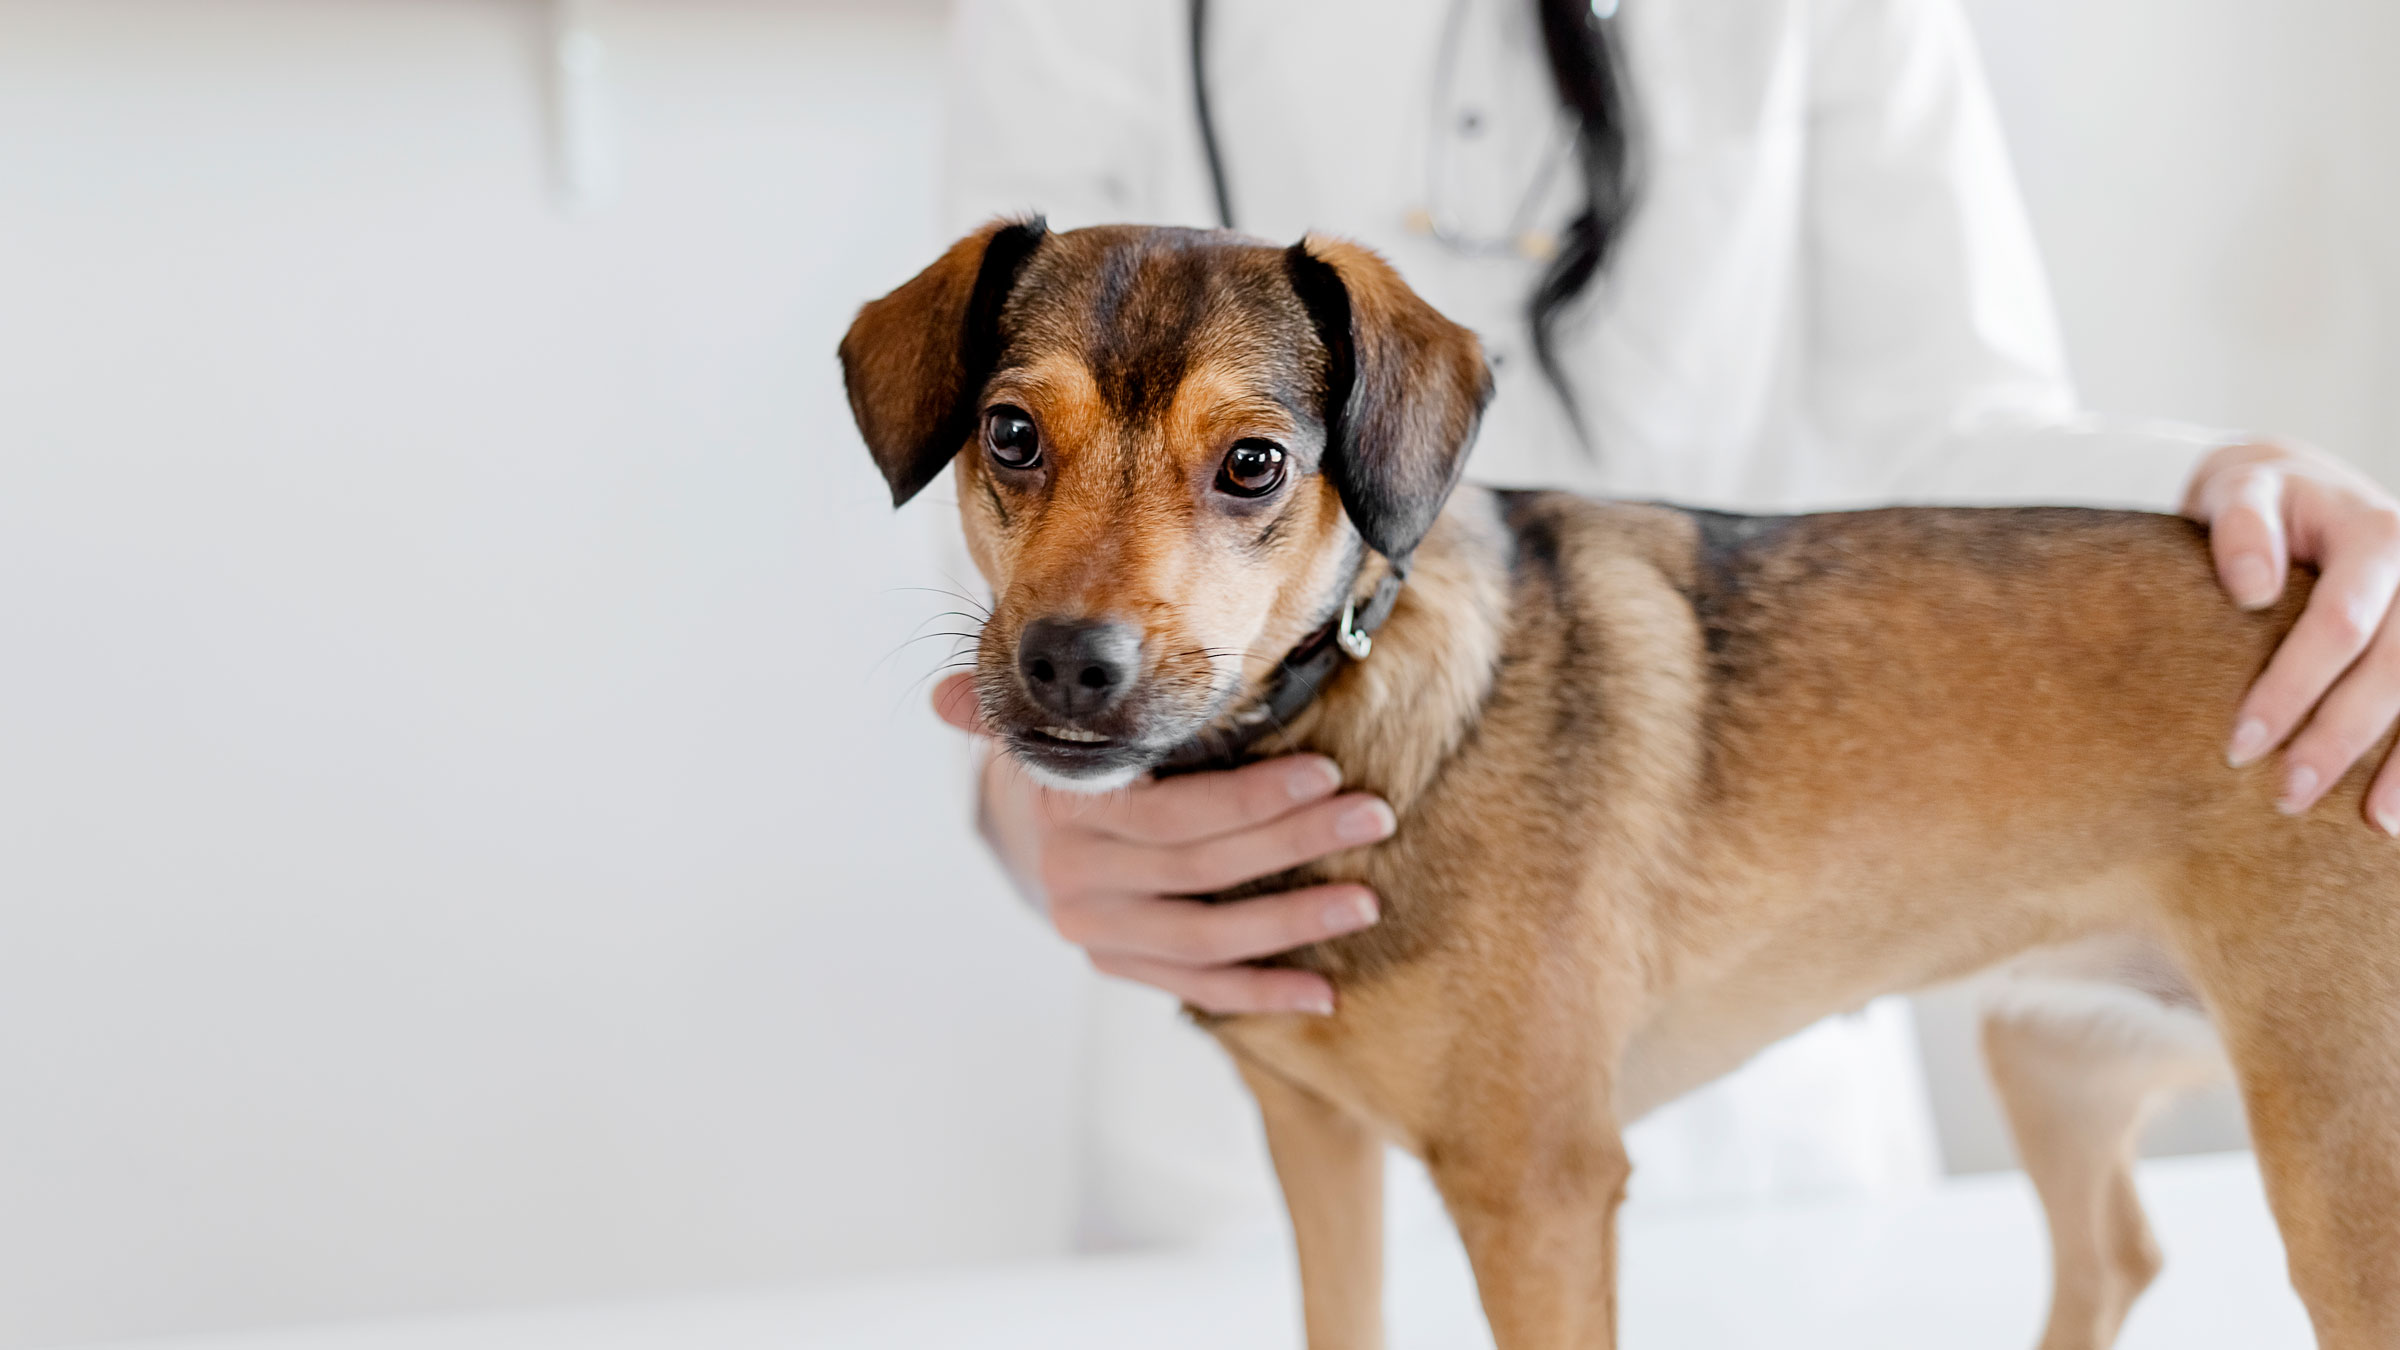 should my dog get lepto vaccine